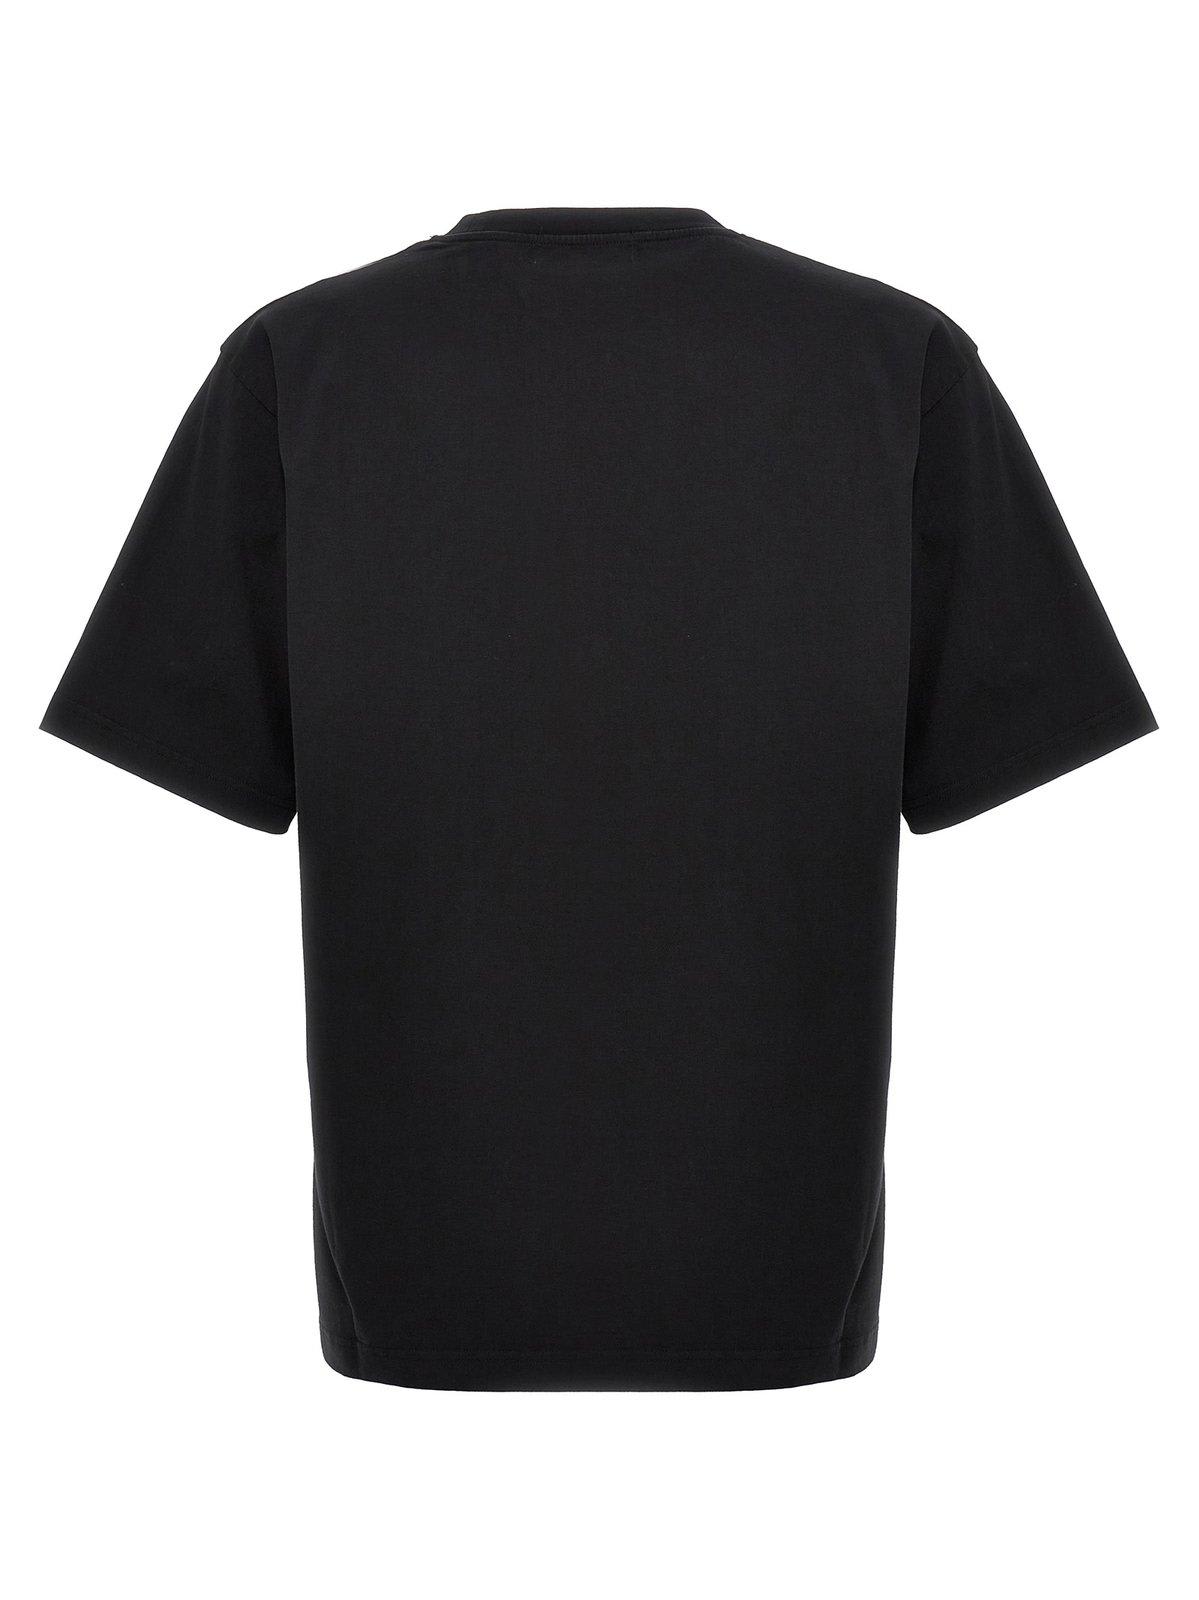 Shop Ambush Logo Printed Crewneck T-shirt In Black